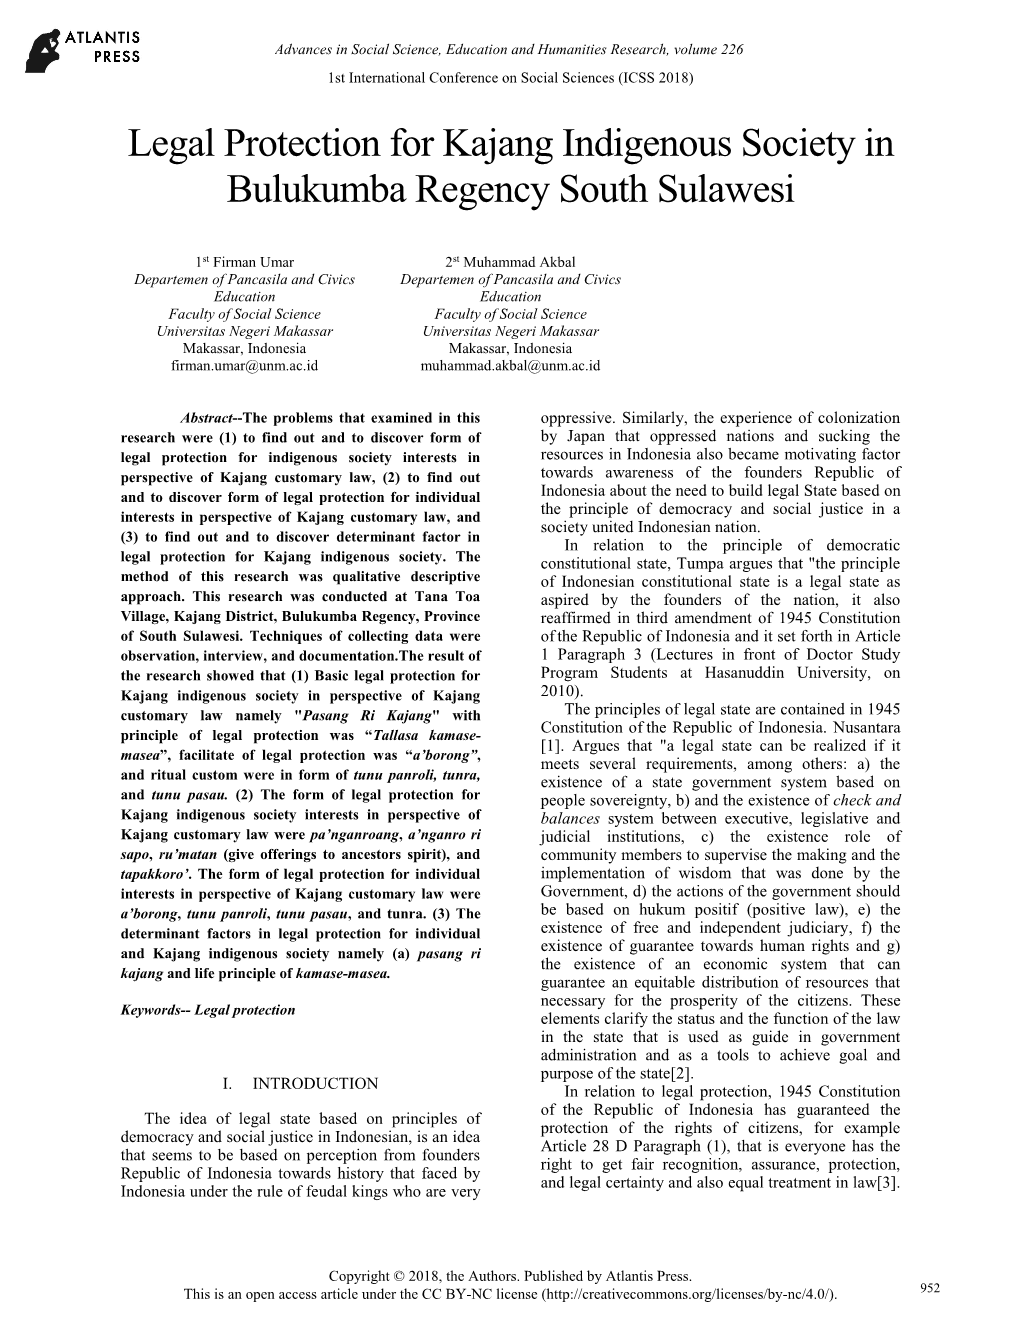 Legal Protection for Kajang Indigenous Society in Bulukumba Regency South Sulawesi